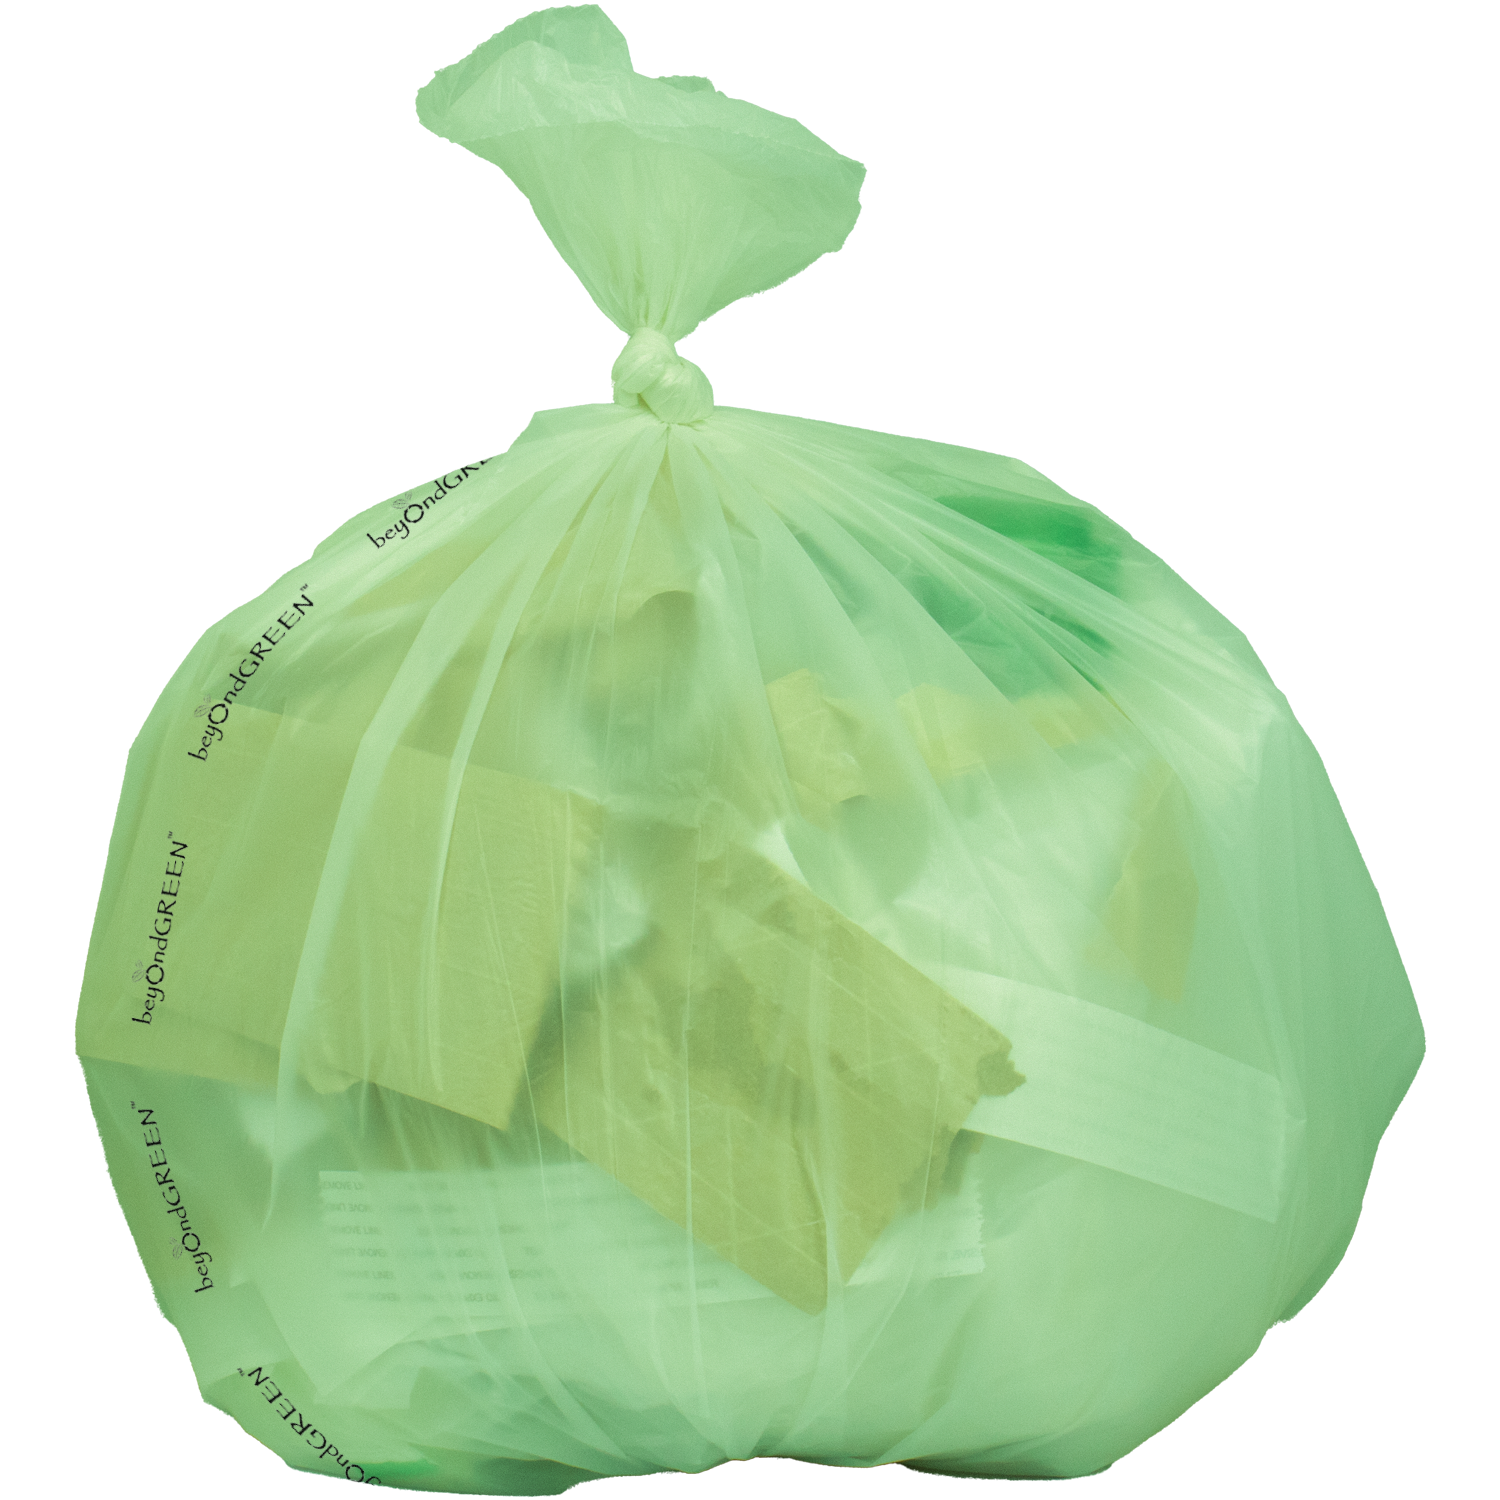 Ecoway - Disposable Garbage Bag - 50pcs - 40 X 50 cm - Blue